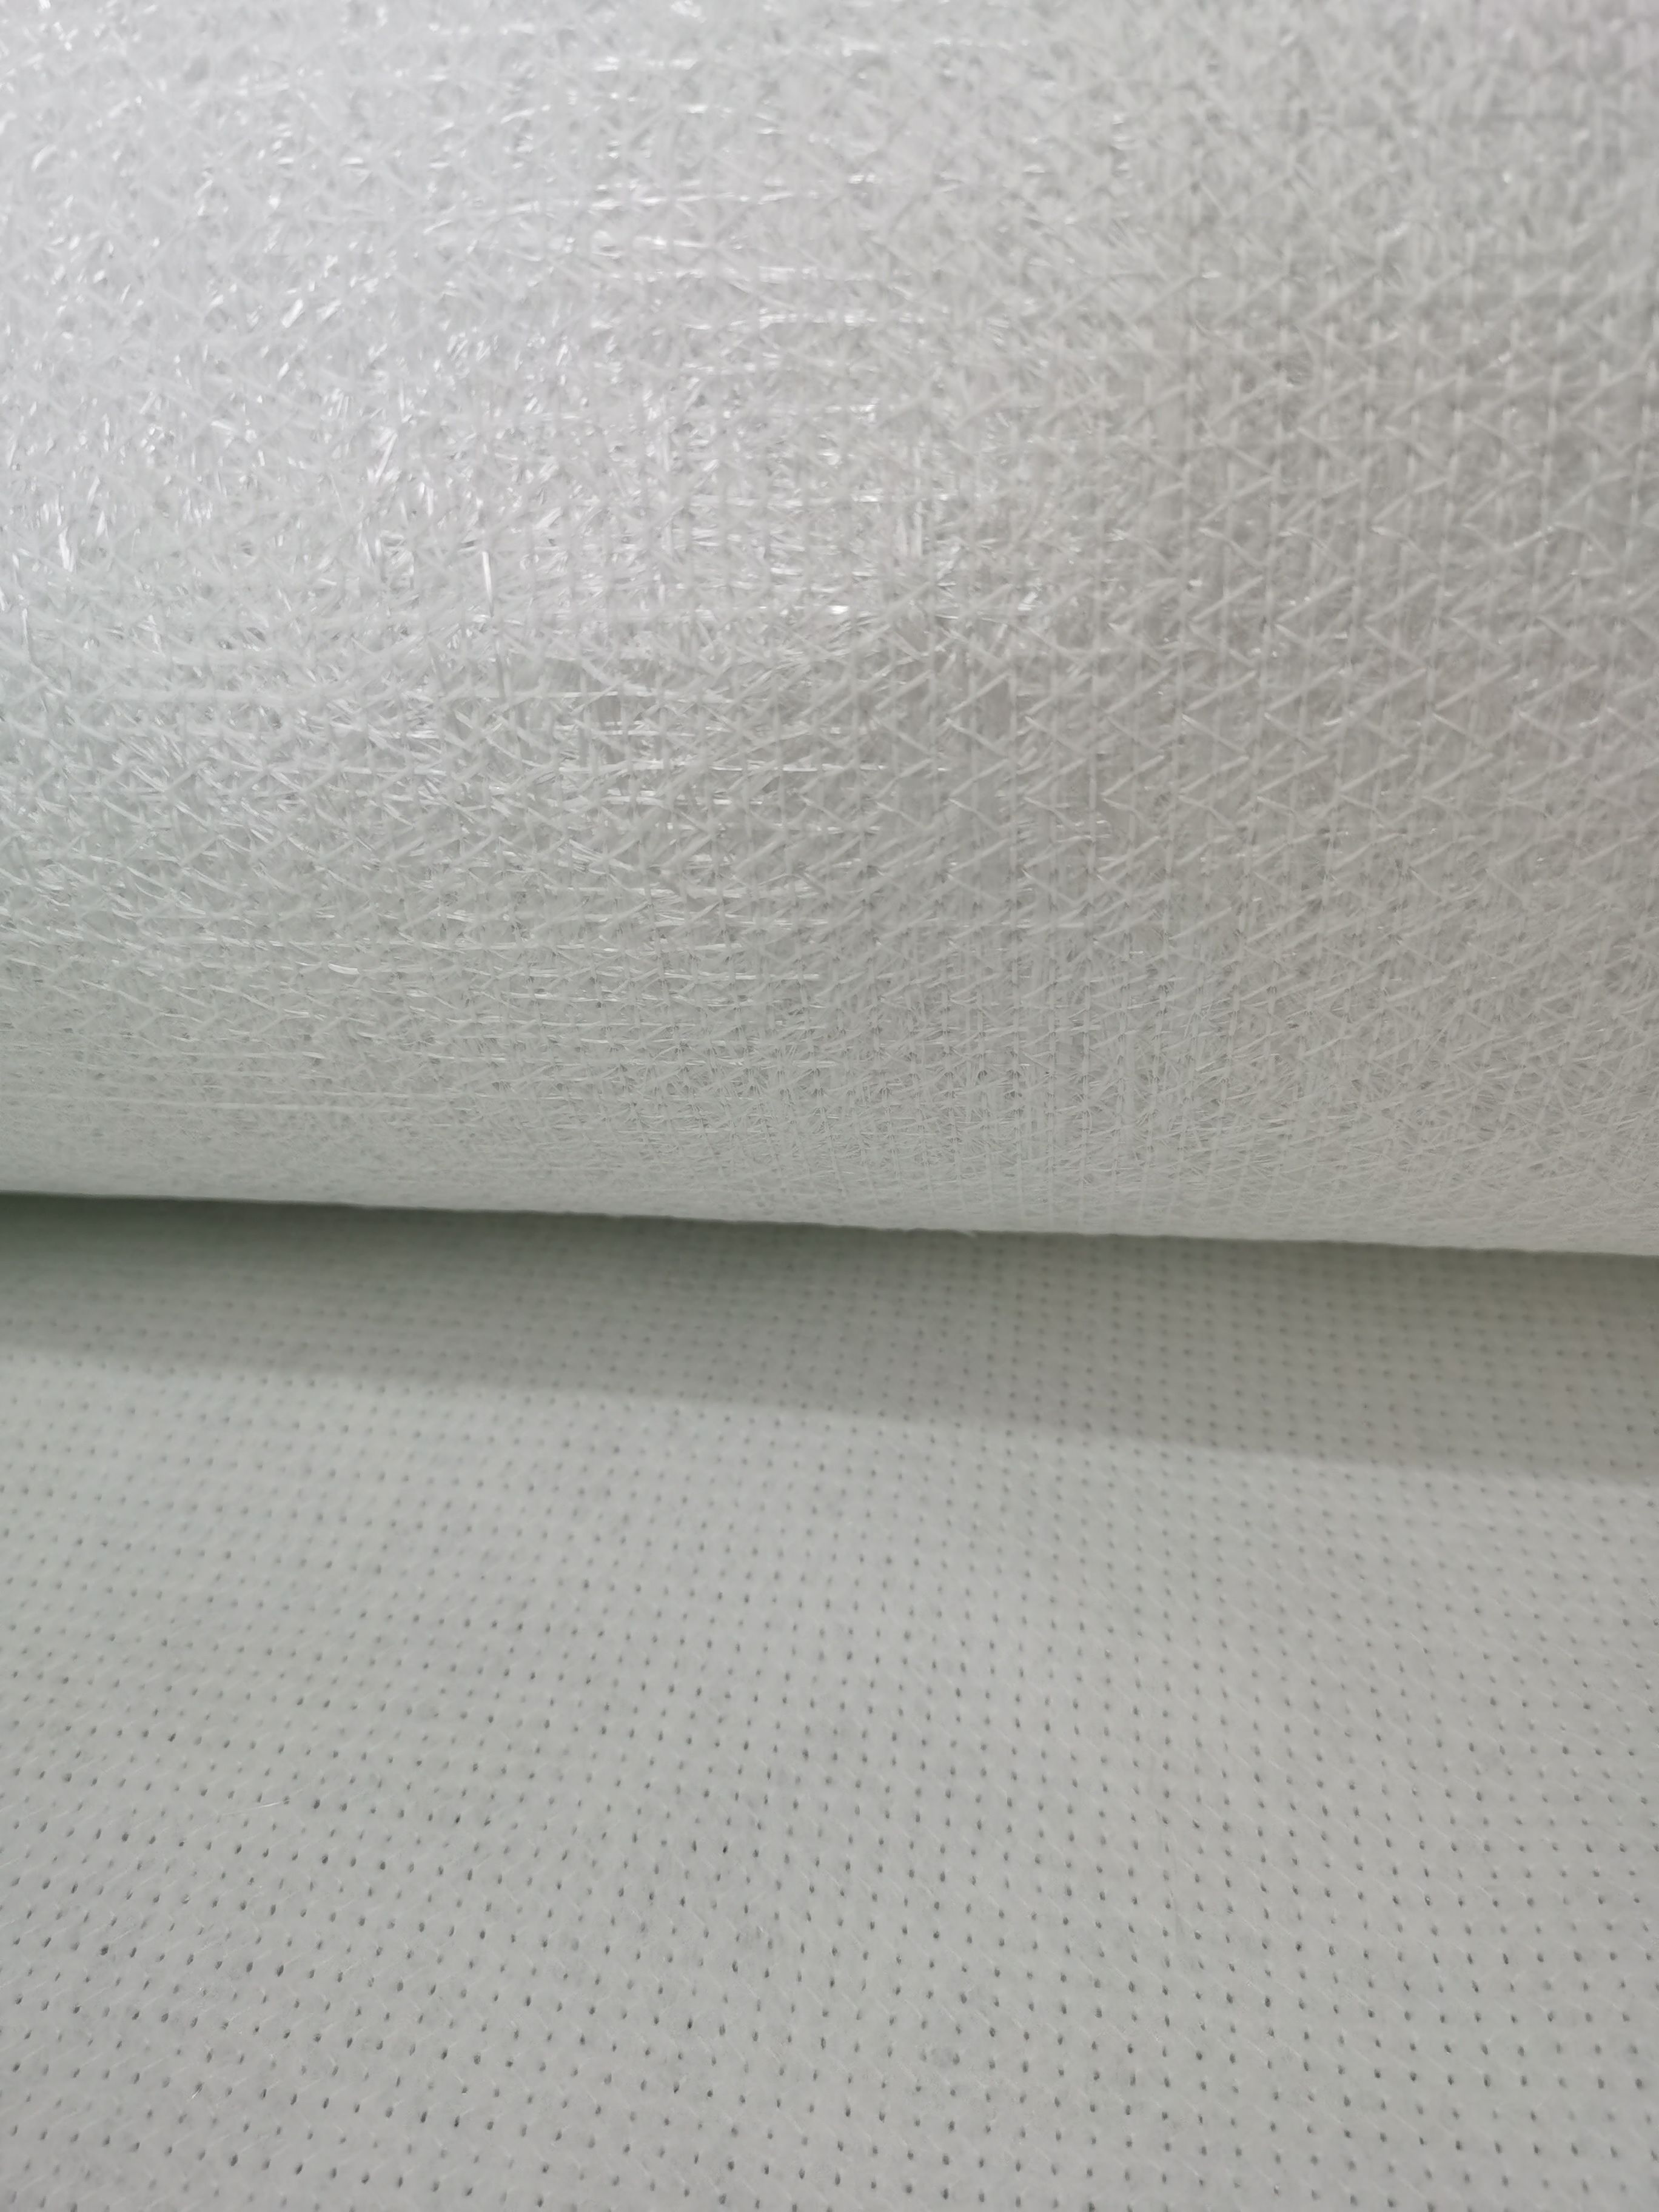 Surface Veil Stitched Combo Ma3